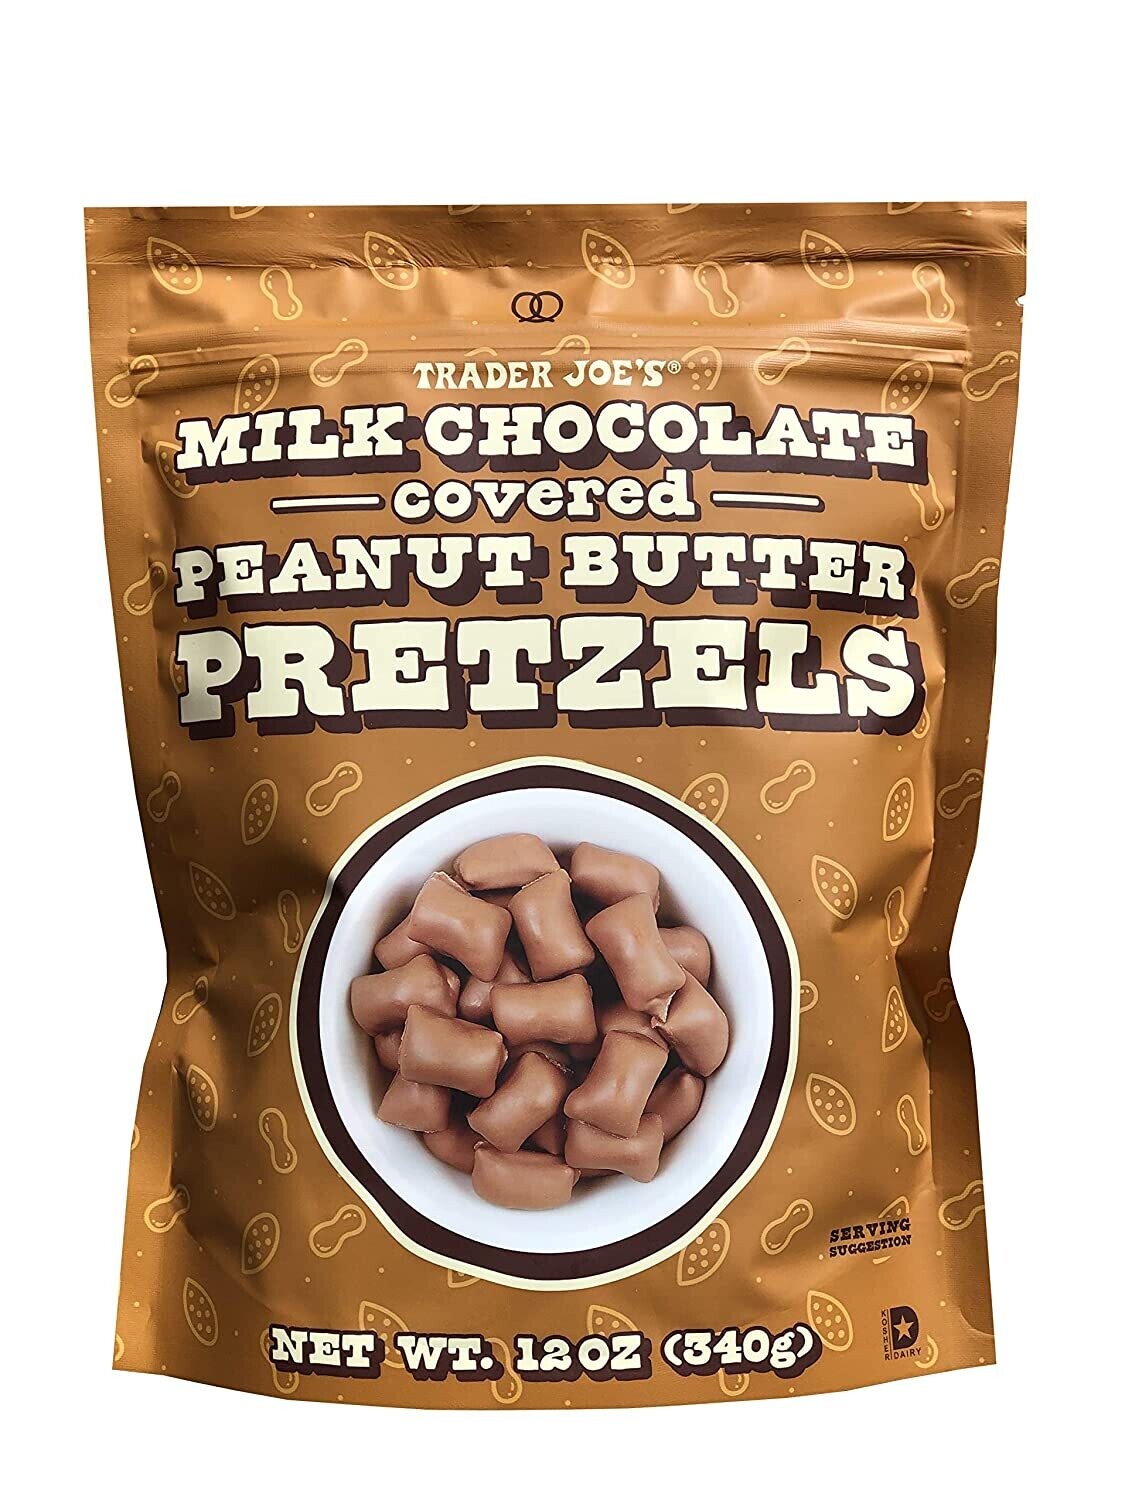 Trader Joe's Milk Chocolate covered Peanut Butter Pretzels